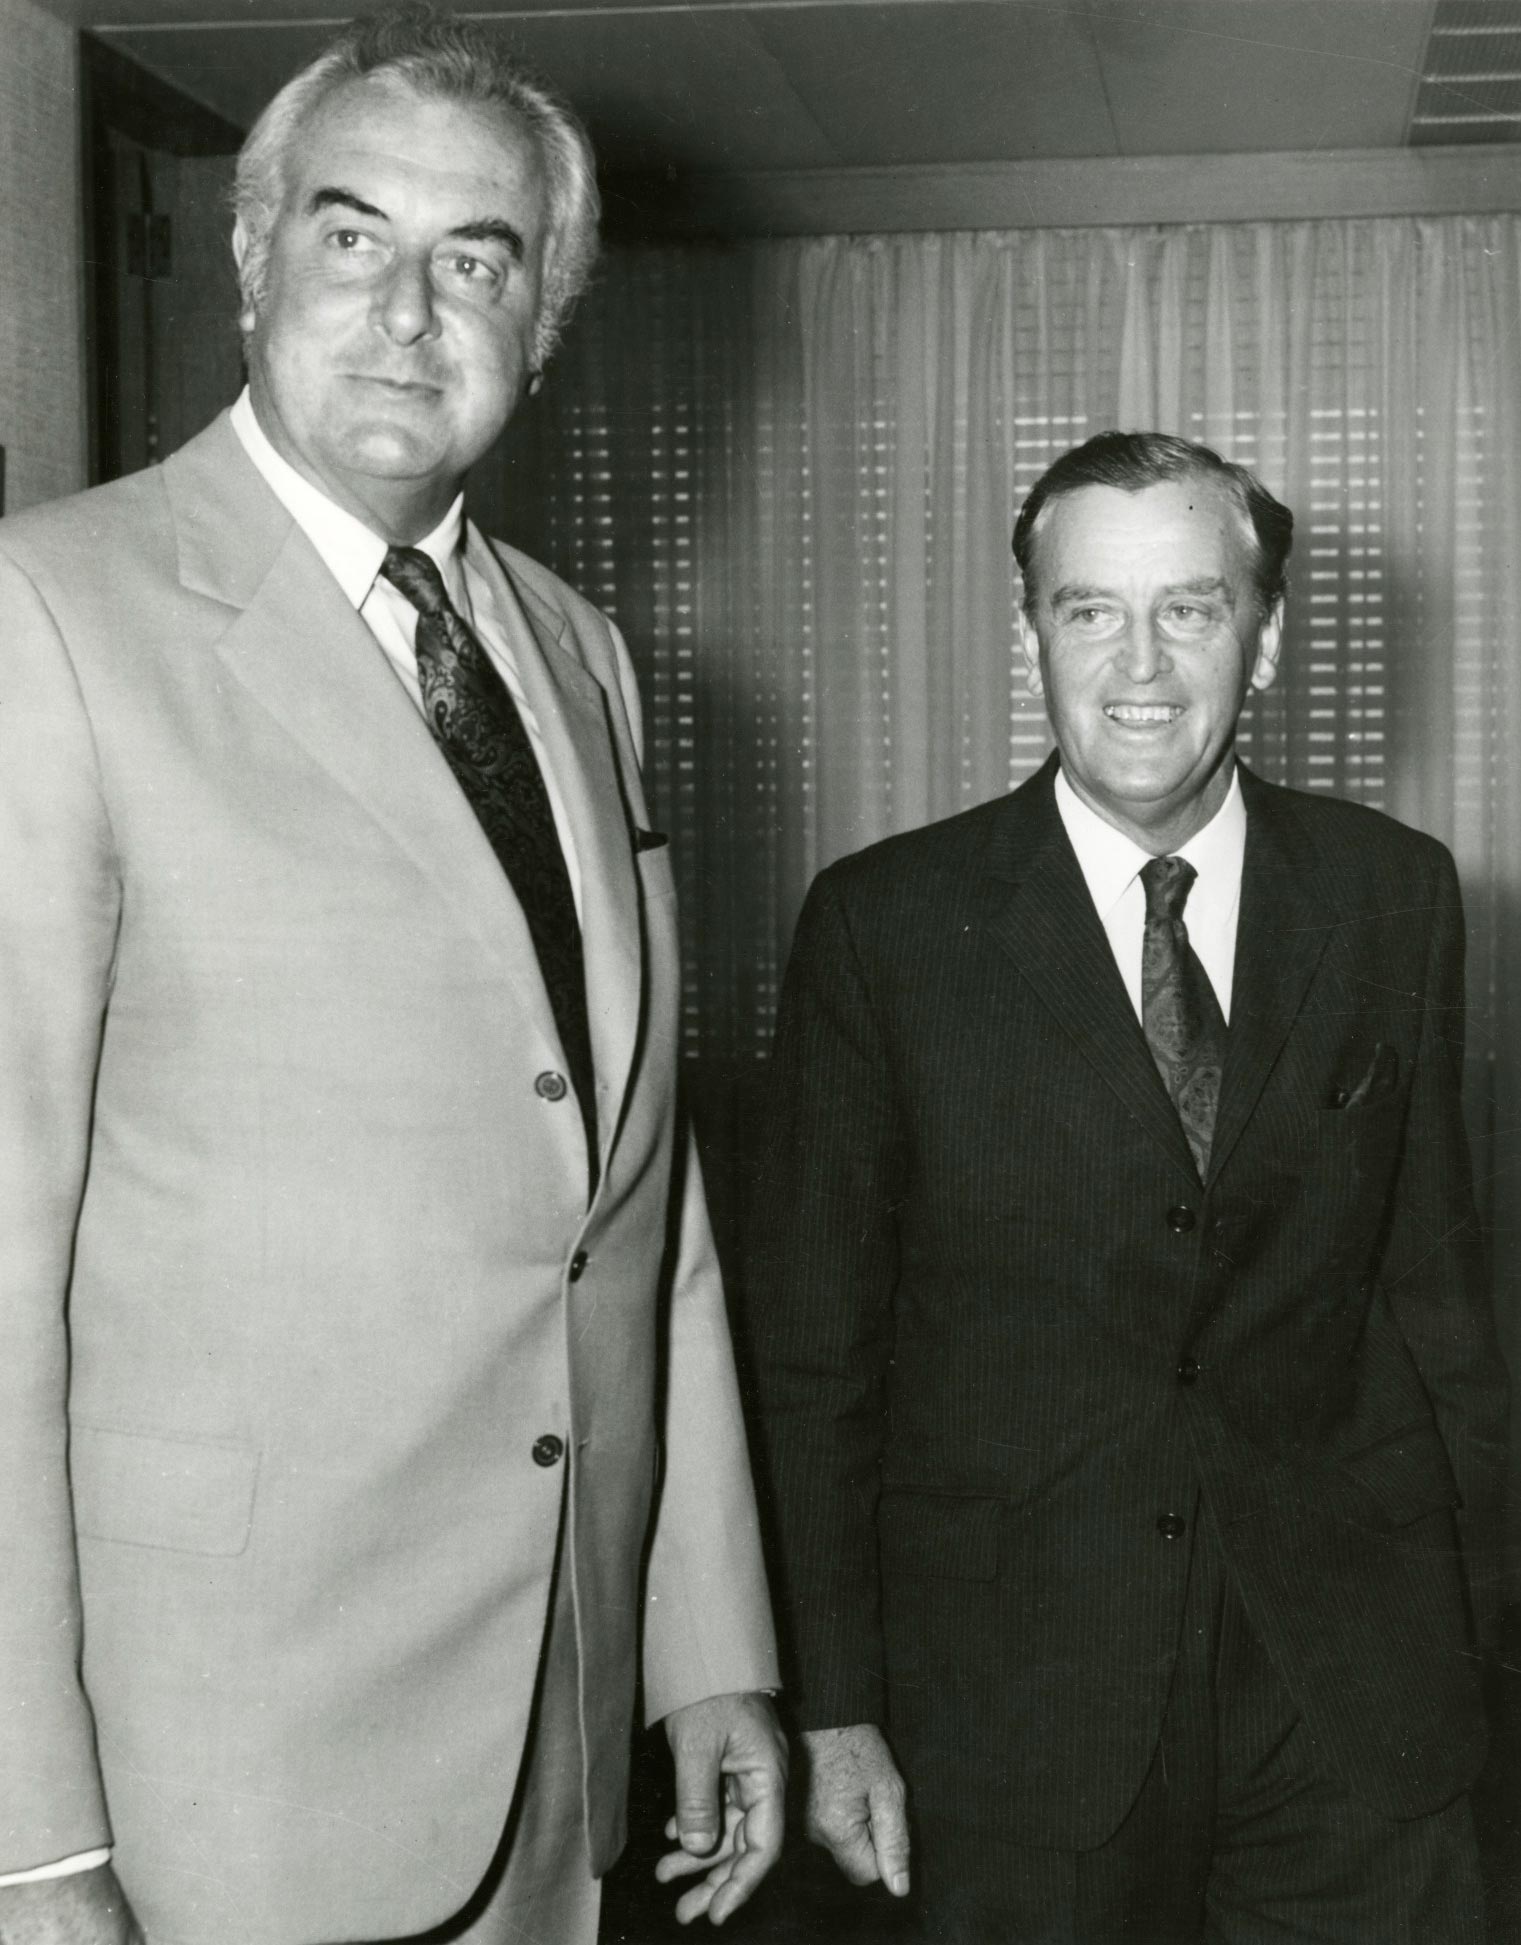 Queensland Premier Joh Bjelke-Petersen and Prime Minister Gough Whitlam, 1973